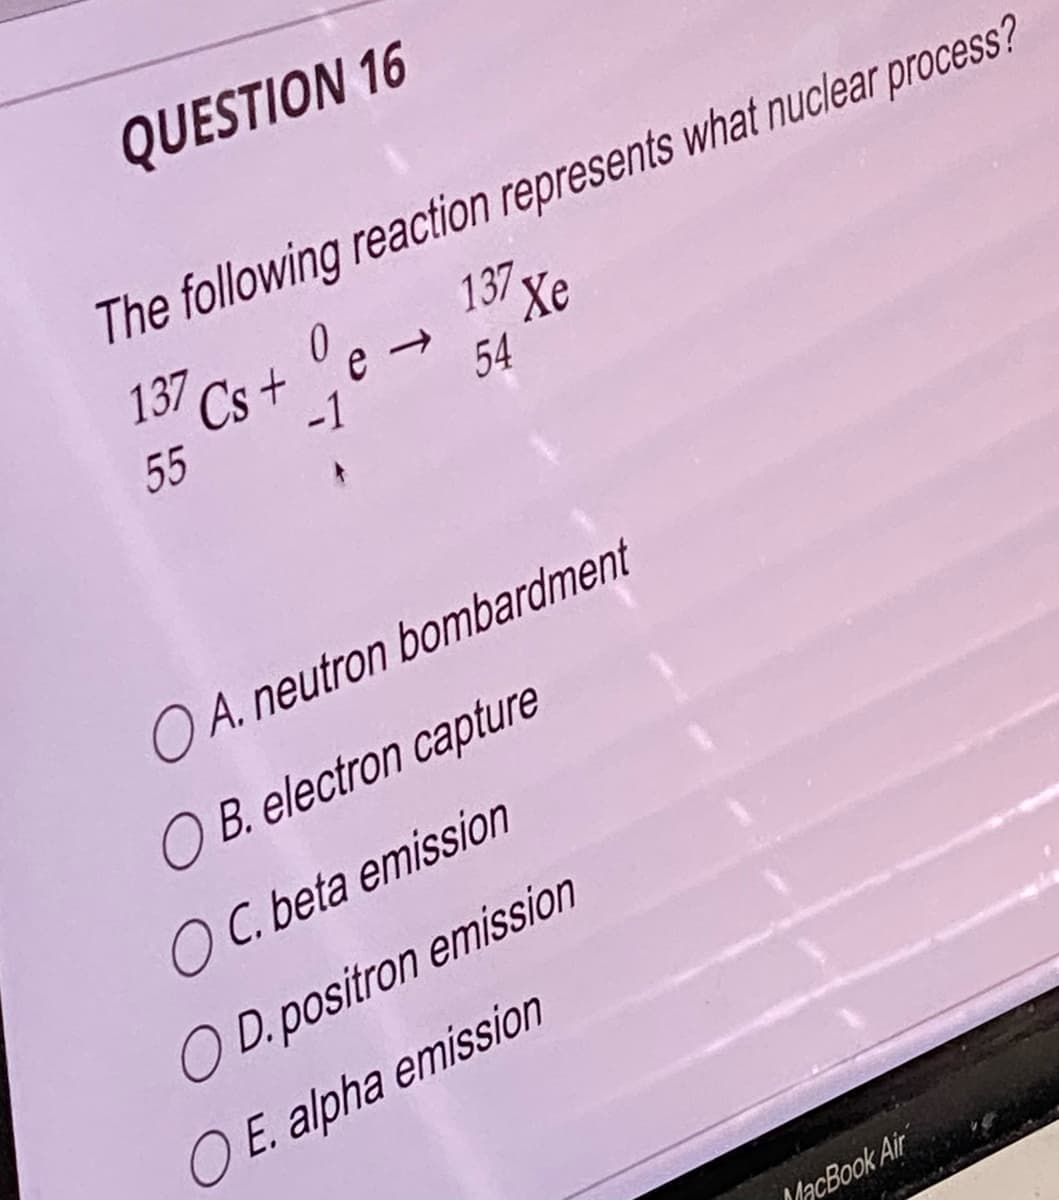 QUESTION 16
The following reaction represents what nuclear process?
137 Xe
0
137 Cs+e →
54
-1
55
OA. neutron bombardment
OB. electron capture
OC. beta emission
OD.positron emission
O E. alpha emission
MacBook Air